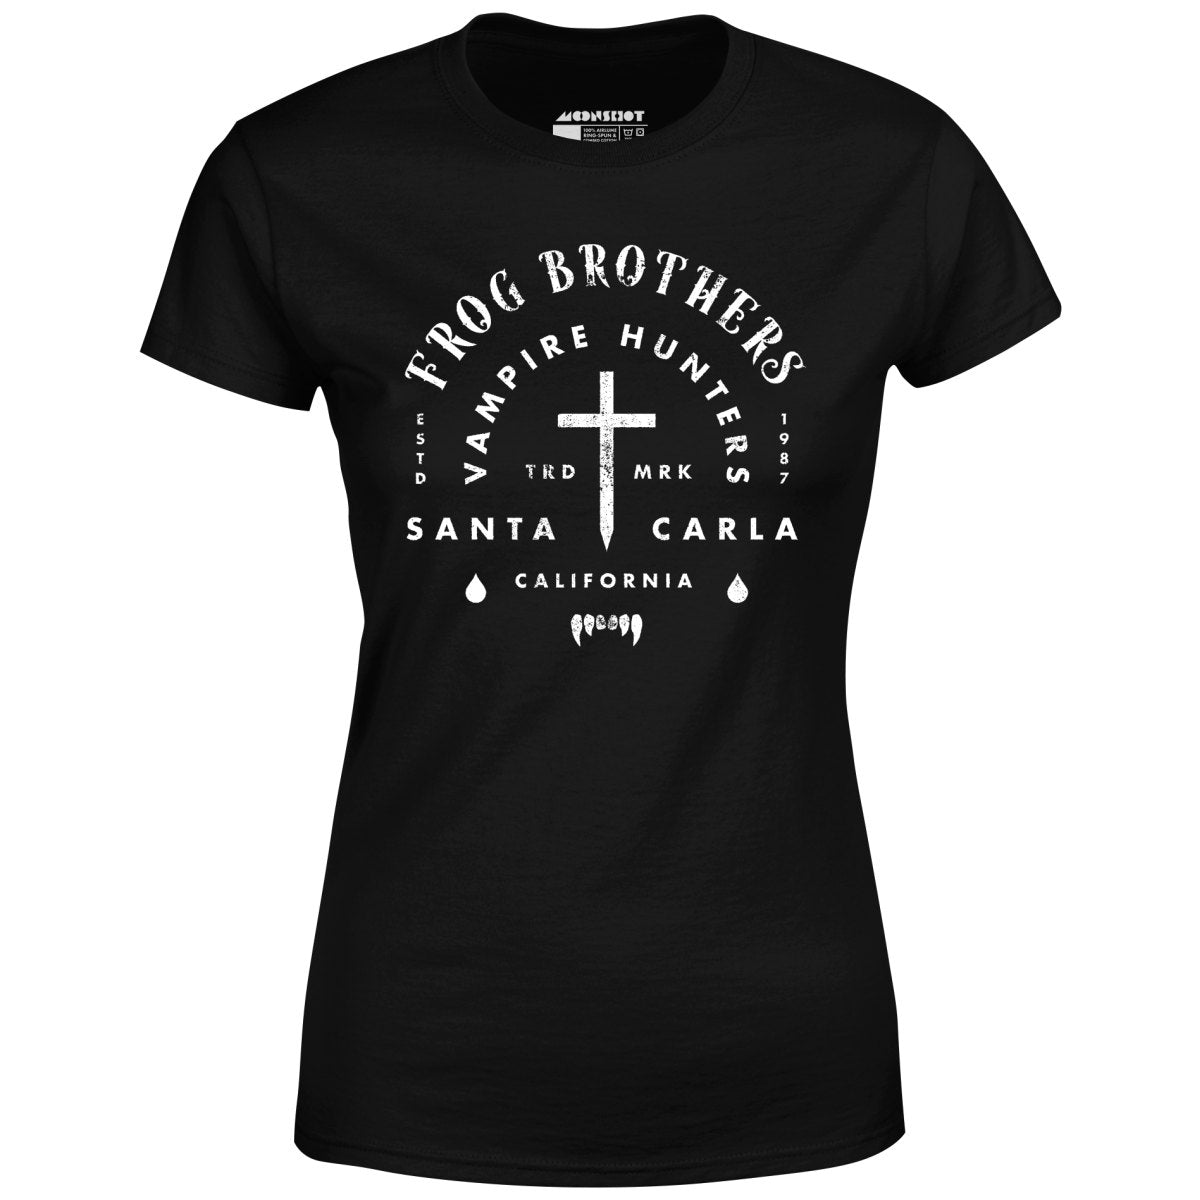 Frog Brothers Vampire Hunters - Women's T-Shirt